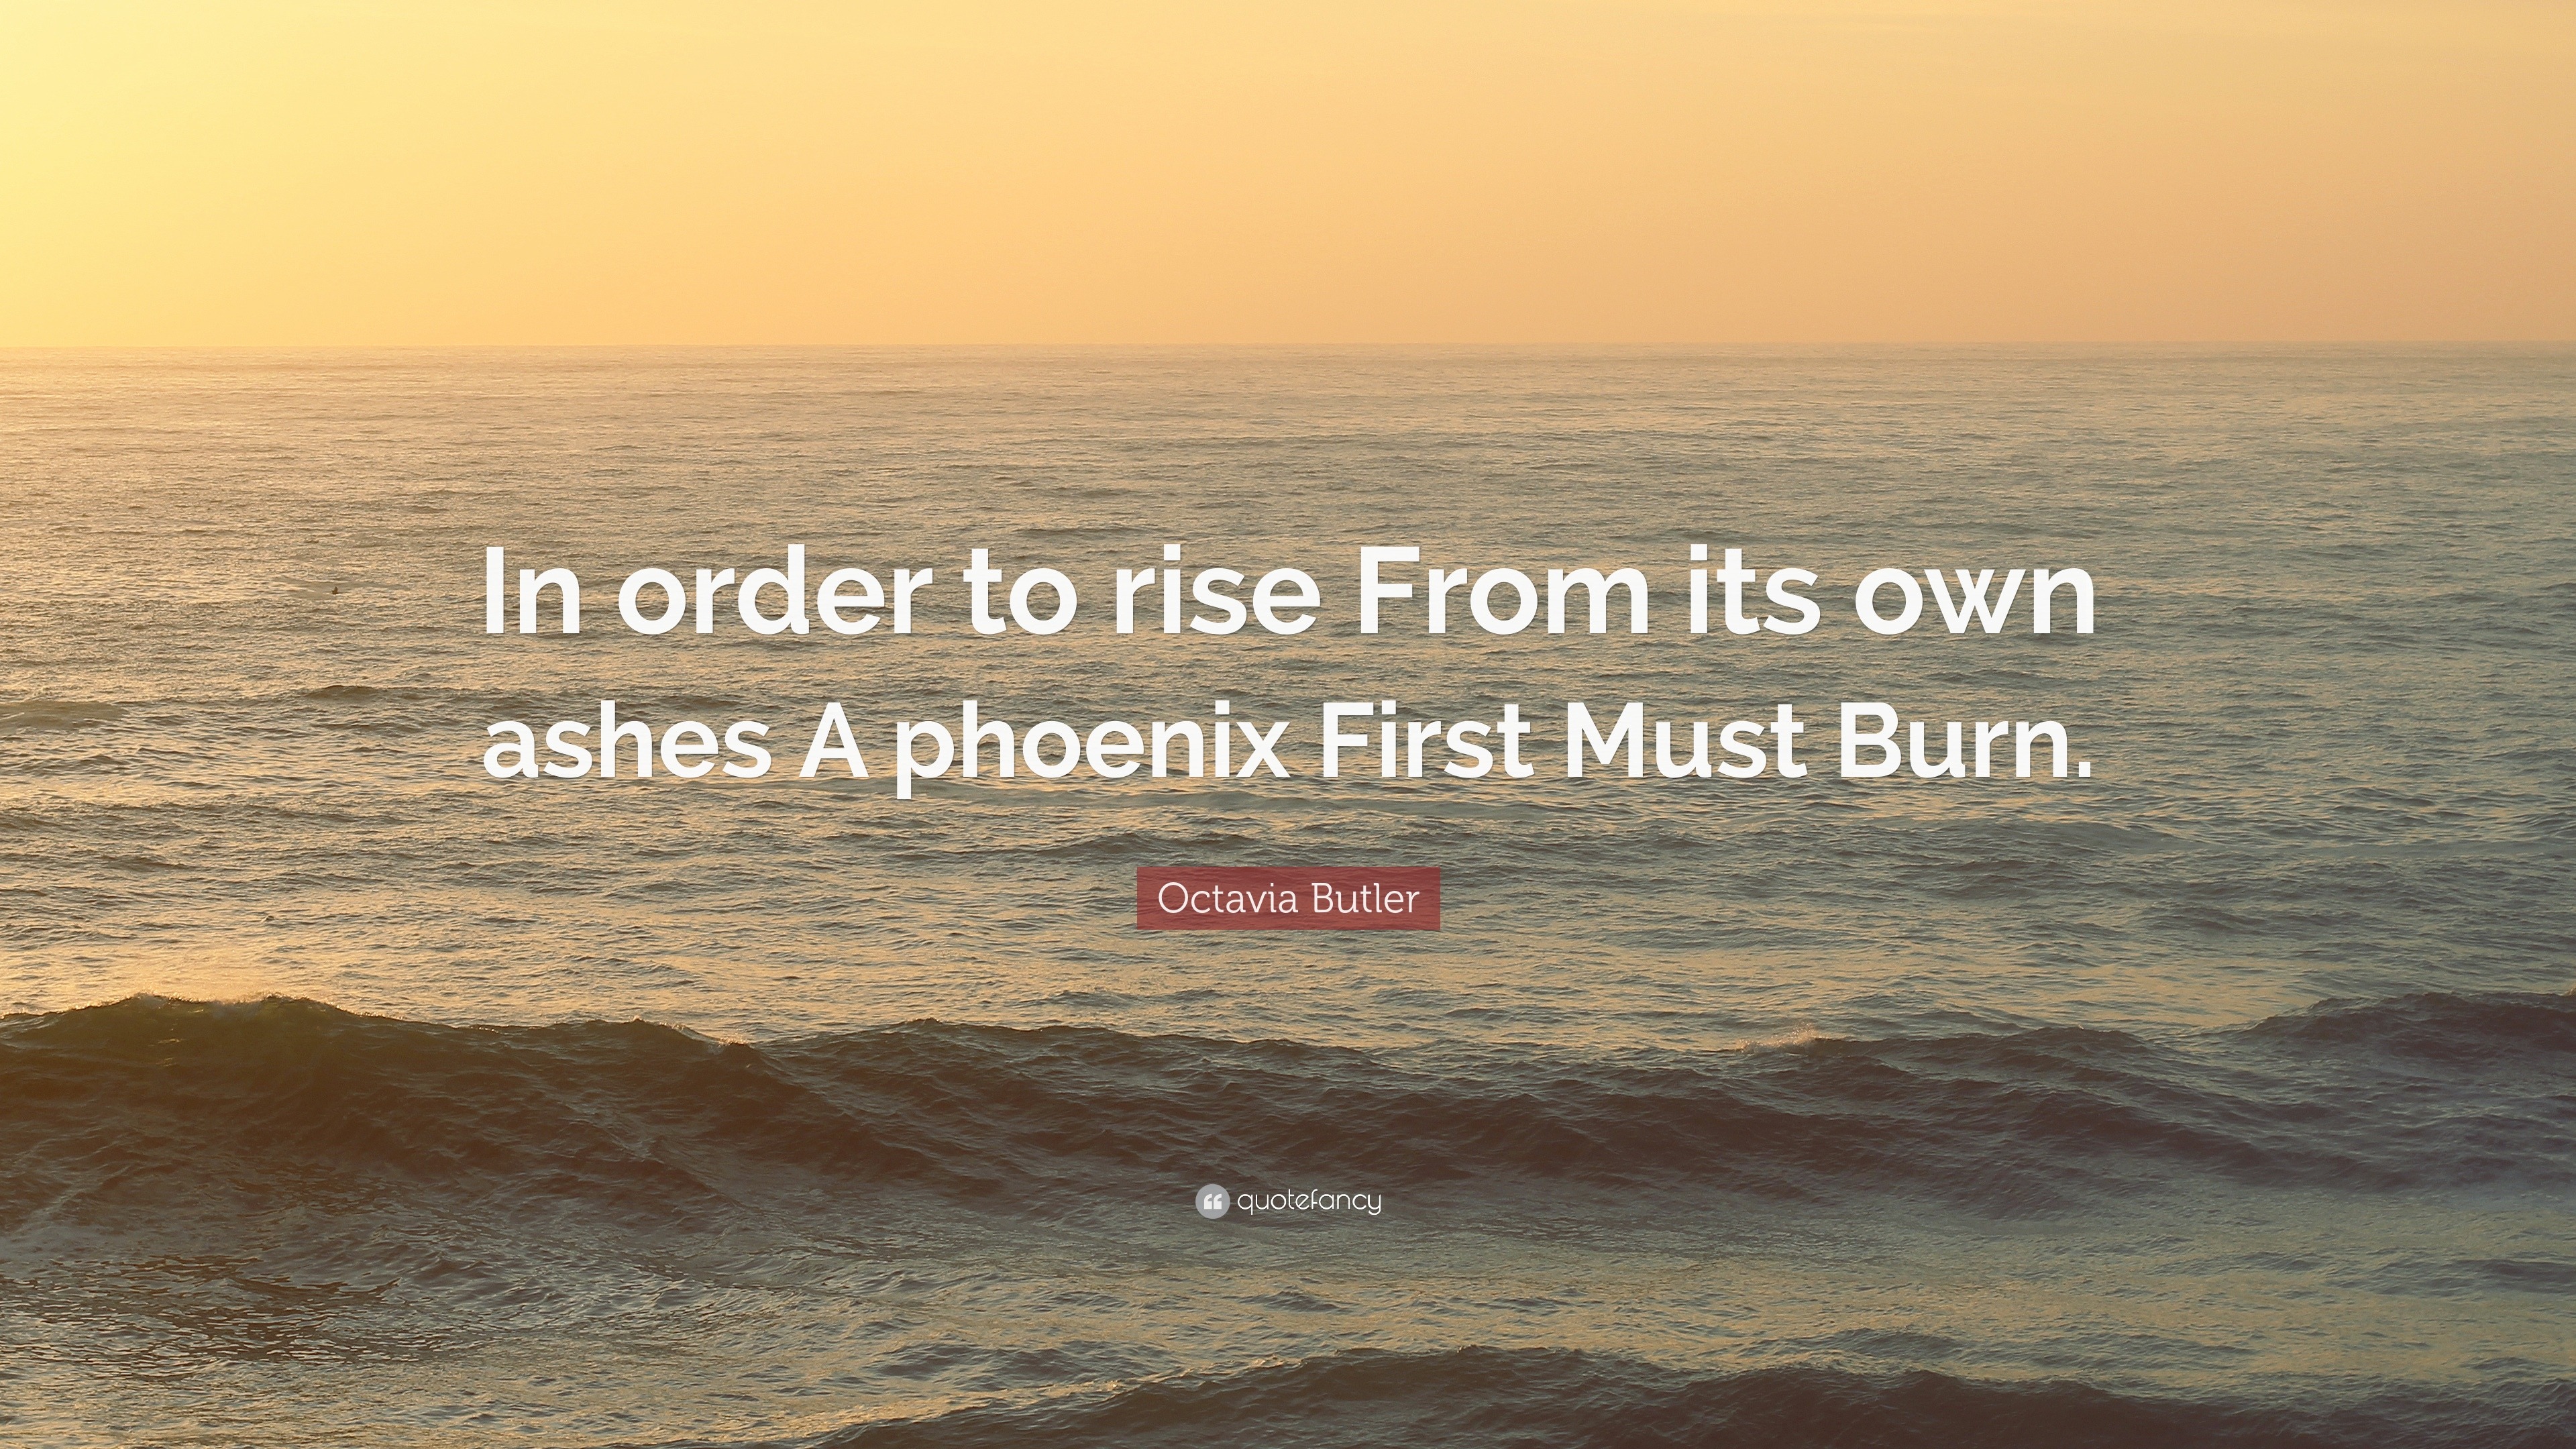 a phoenix first must burn